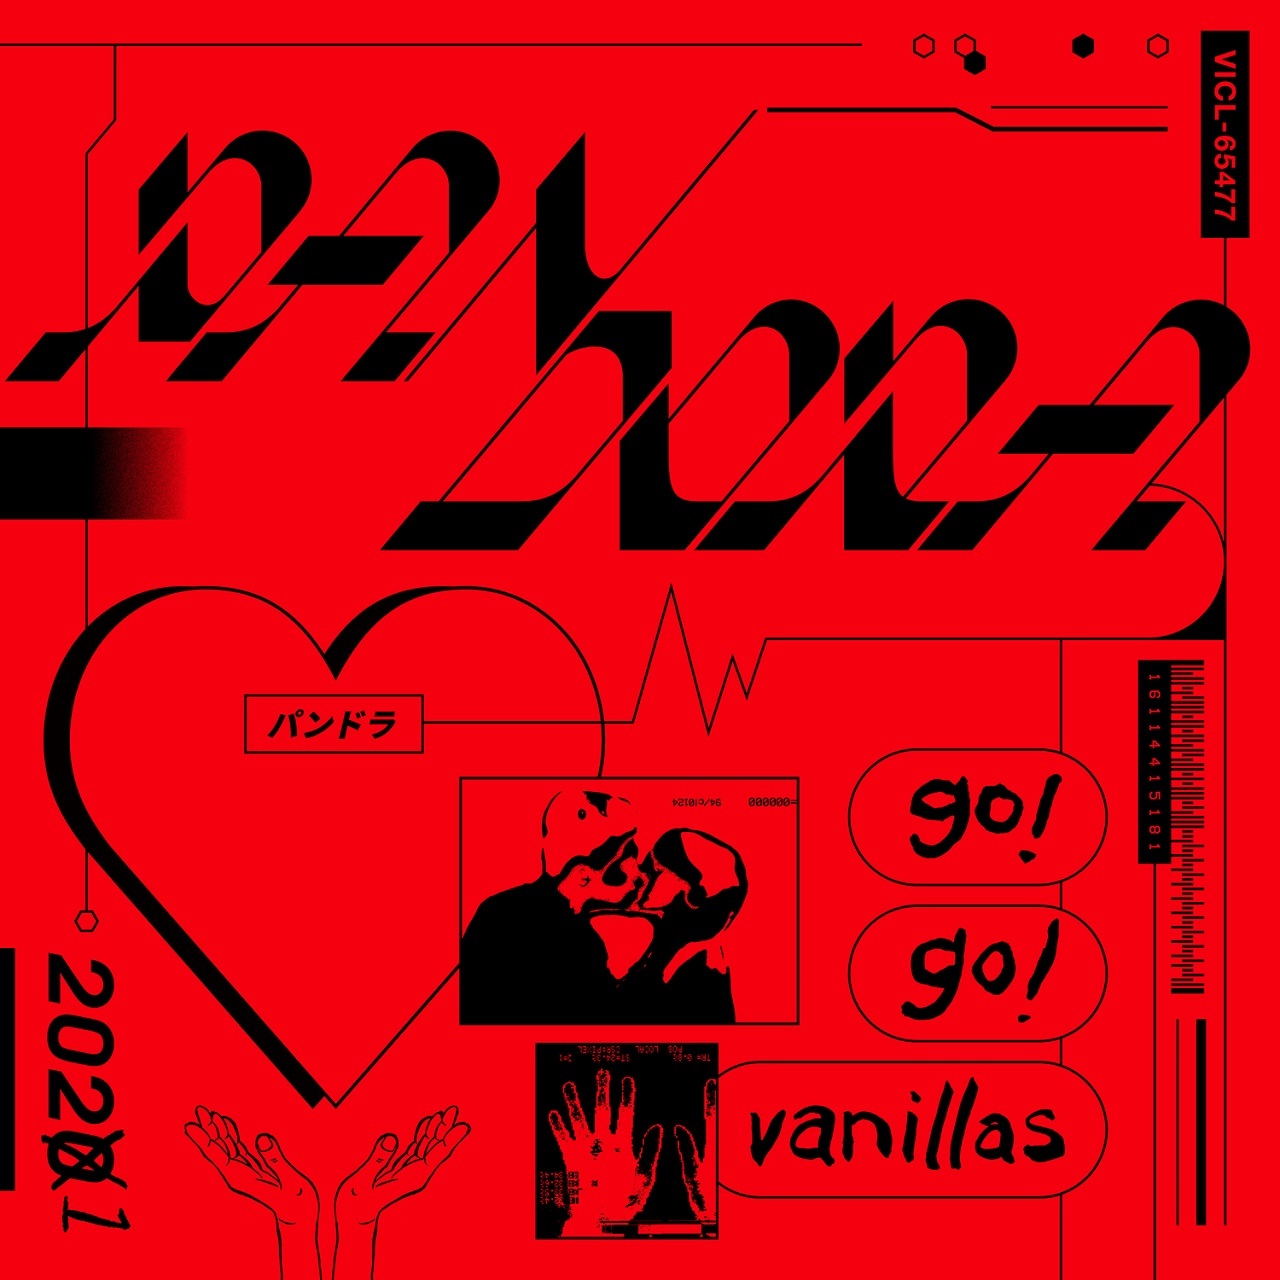 go go vanillas ニューアルバム pandora 魅惑のアートワーク 限定盤の特殊仕様公開 spice goo ニュース